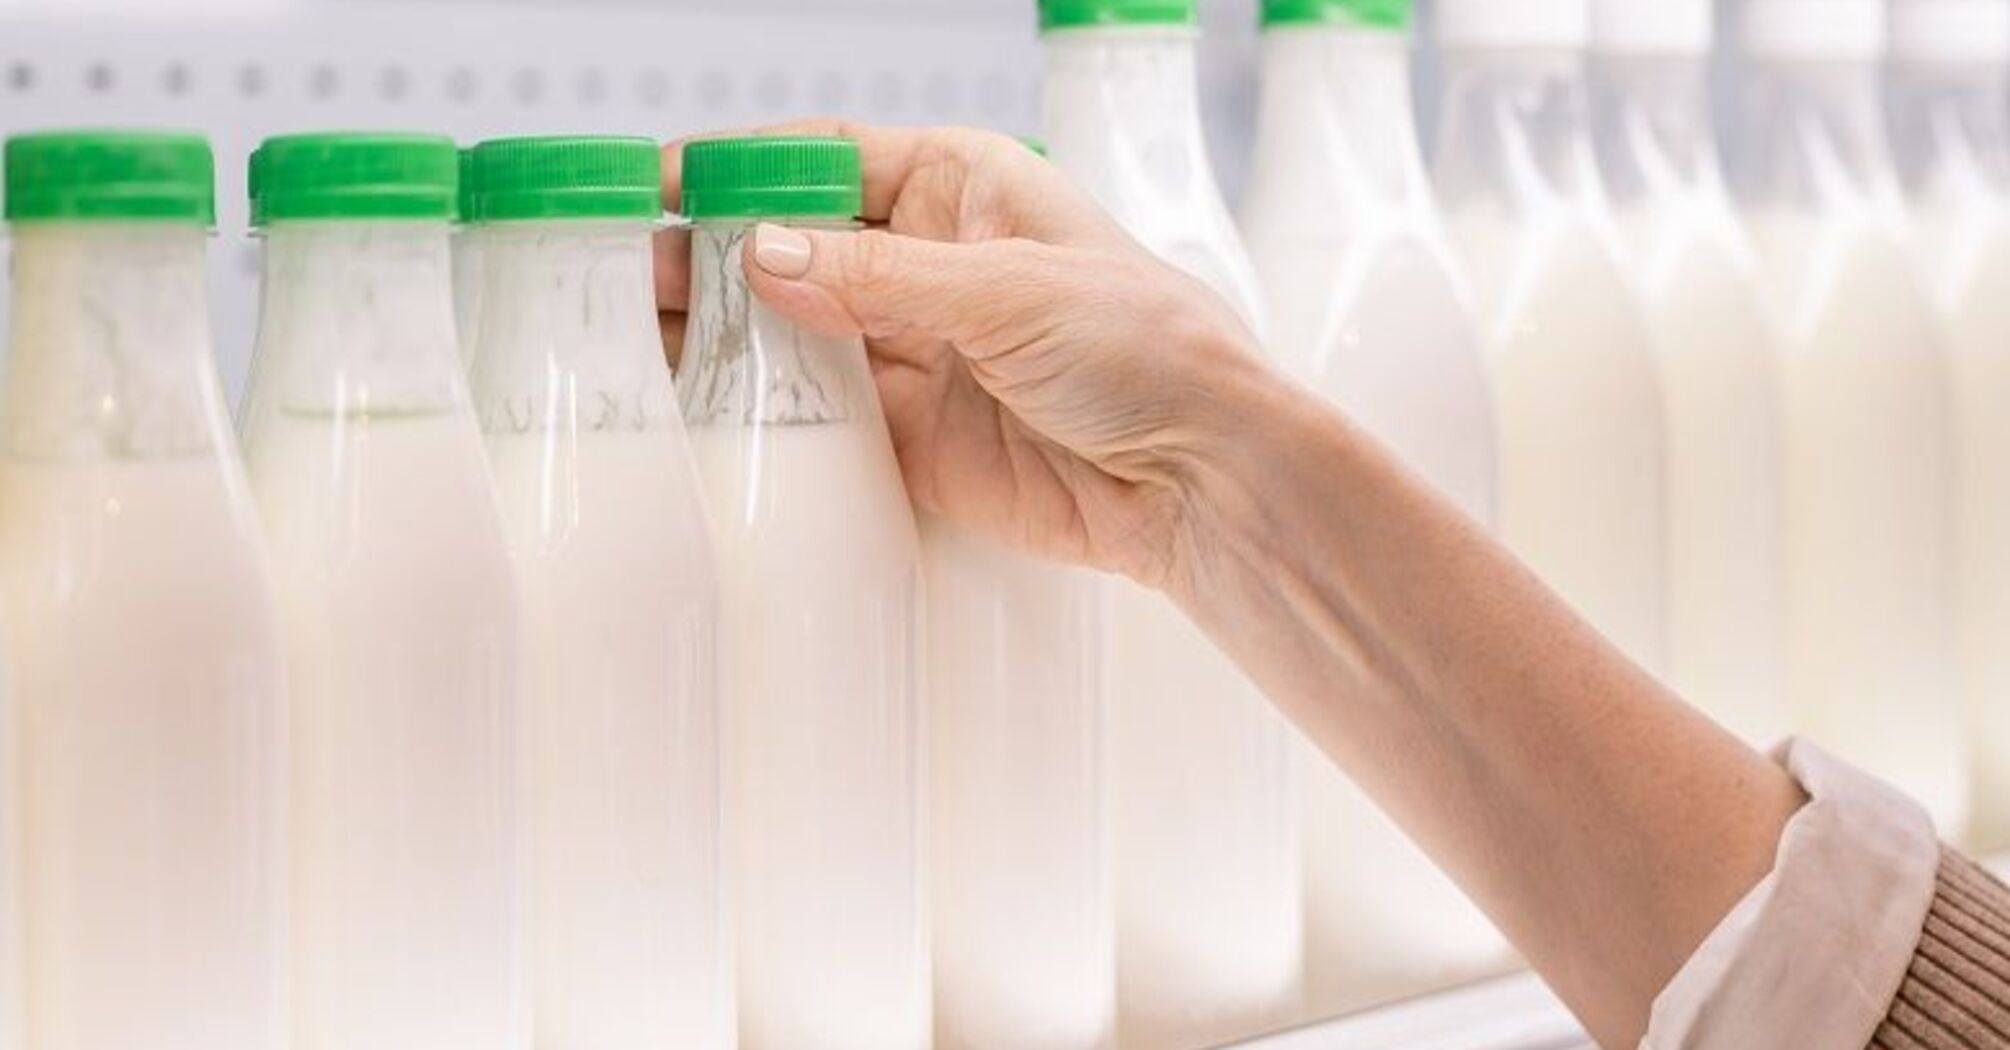 How to extend the shelf life of milk